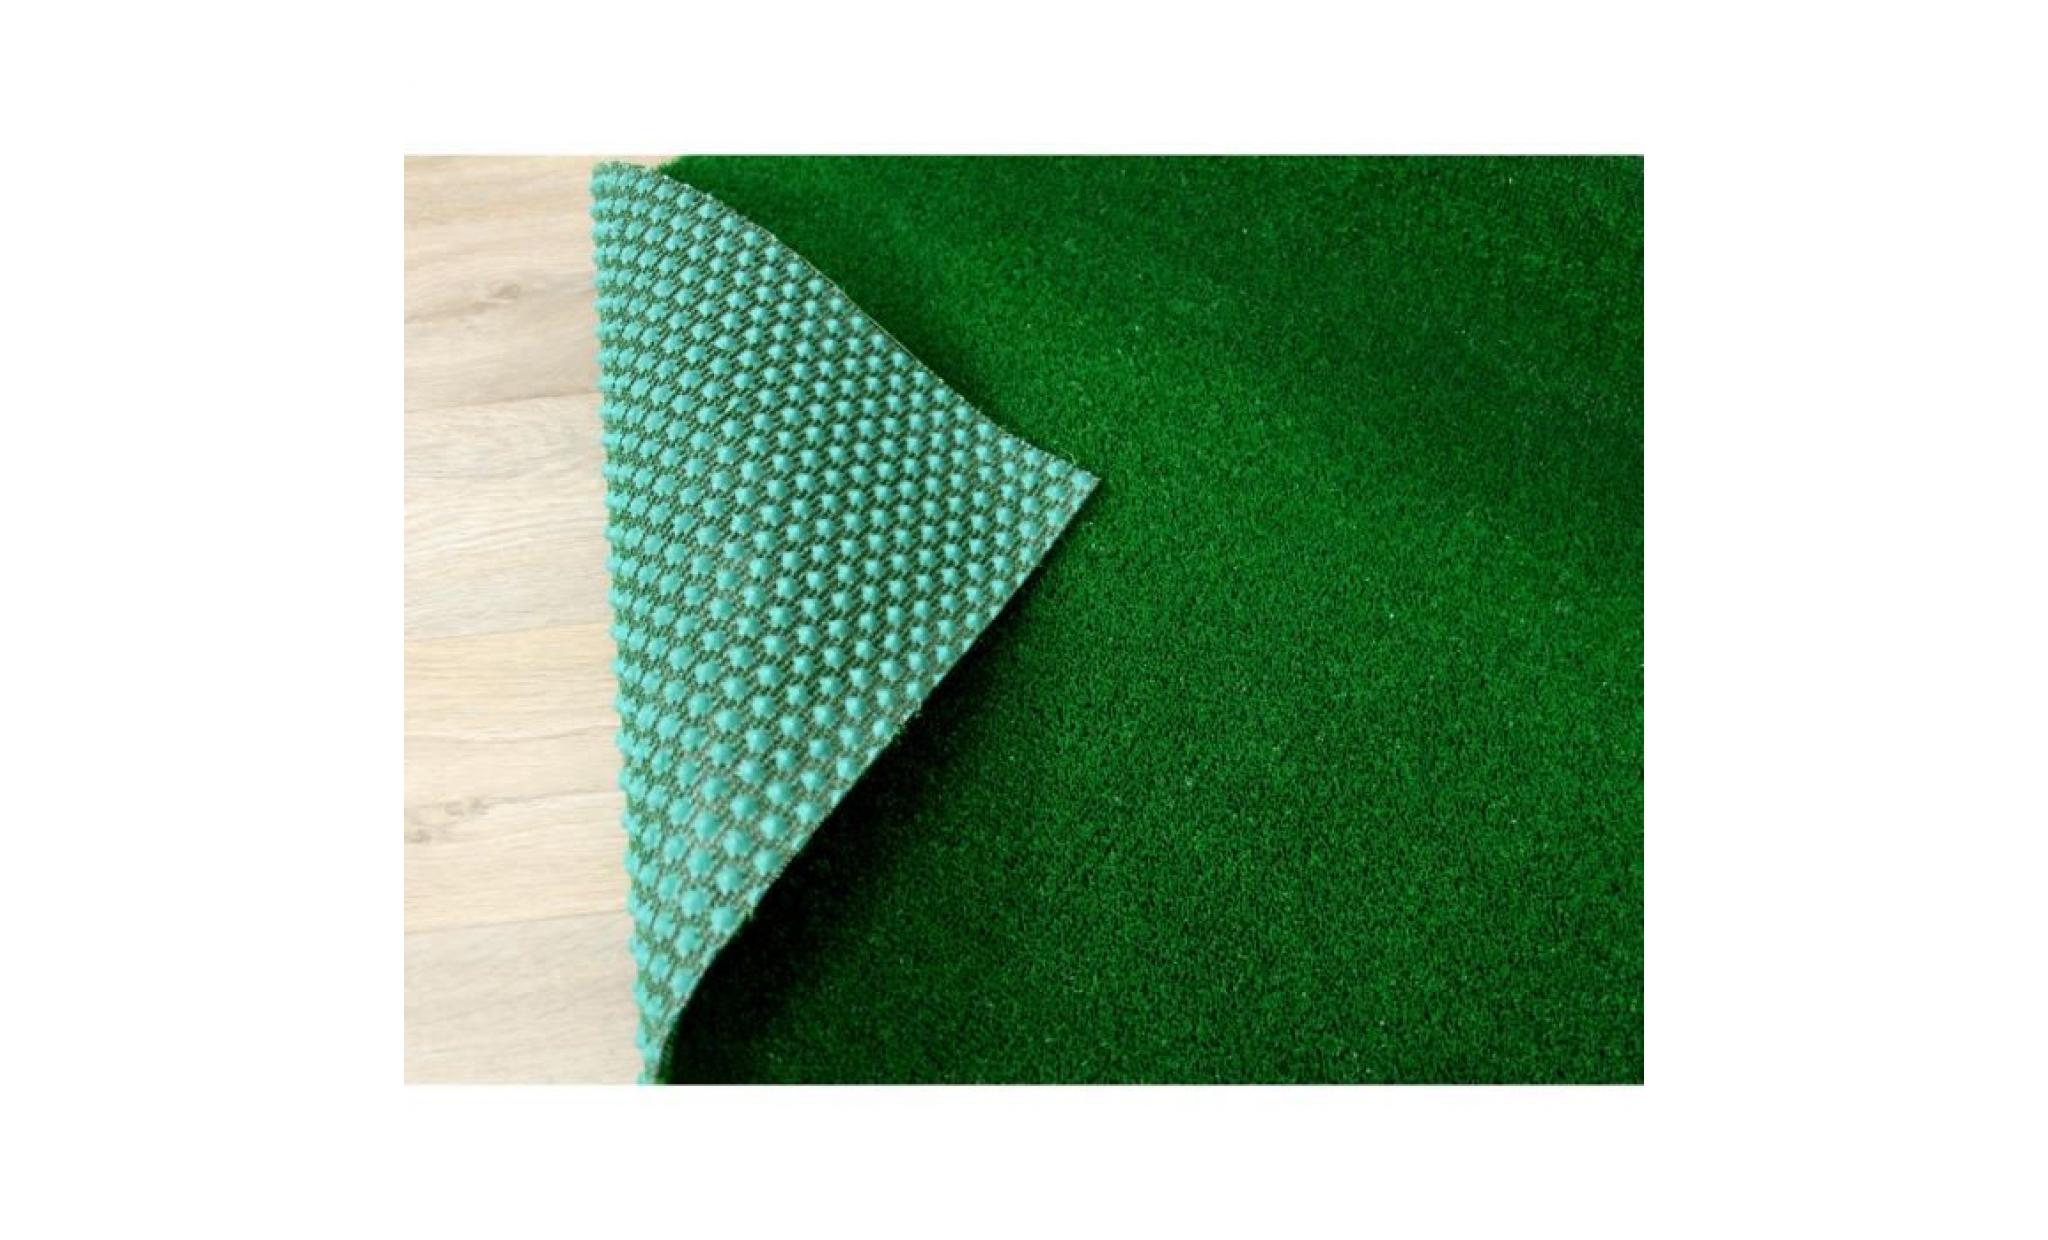 york   tapis type gazon artificiel avec nubs – pour jardin, terrasse, balcon   vert   [400x100 cm] pas cher